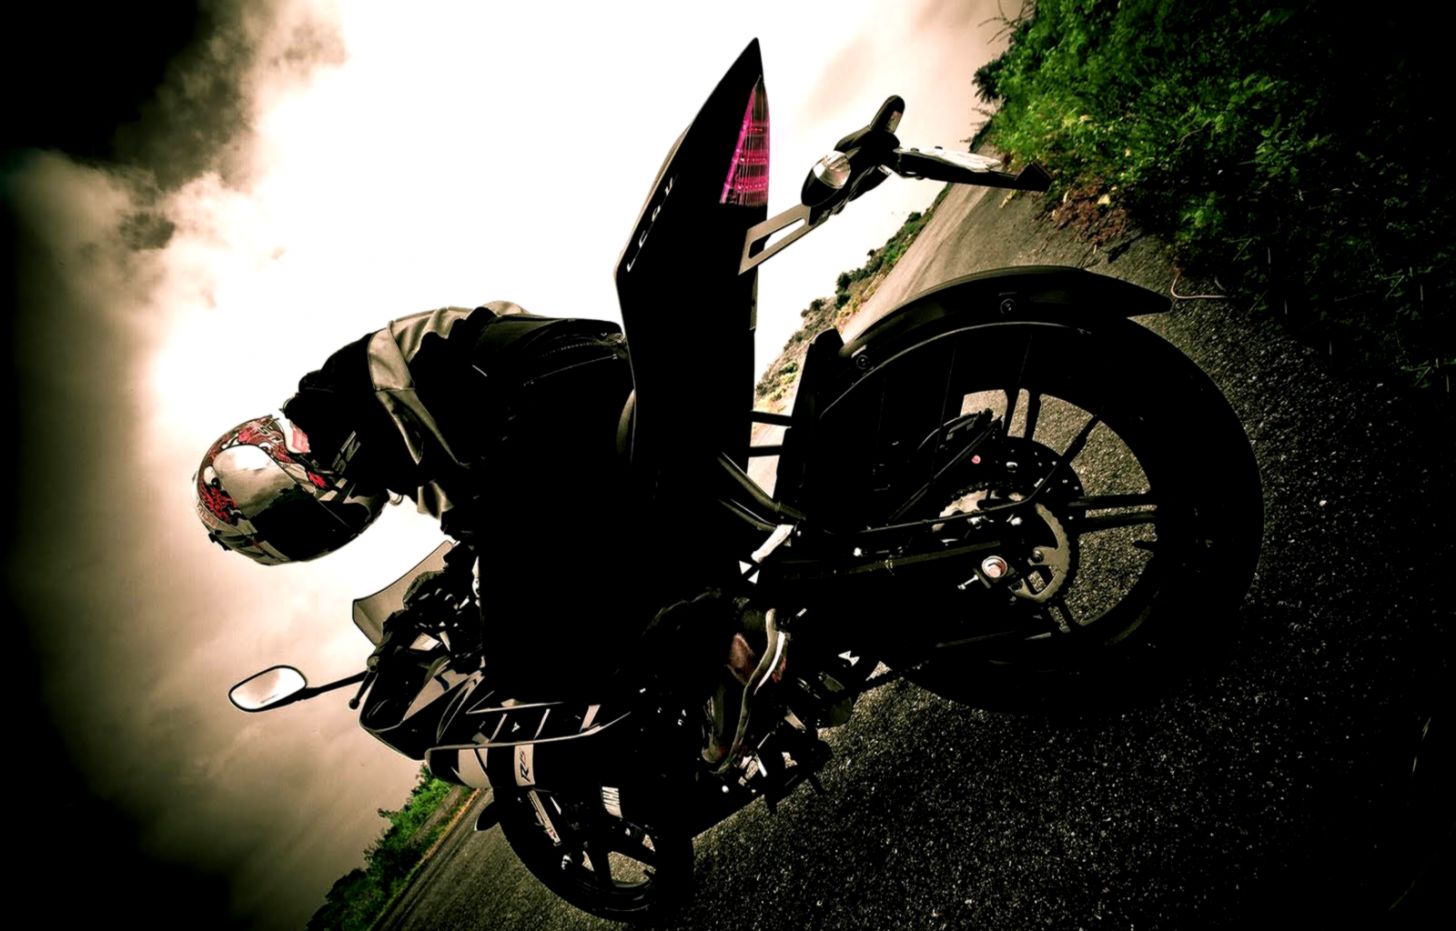 r15 bike wallpaper,stunt performer,motorcycle,vehicle,freestyle motocross,stunt